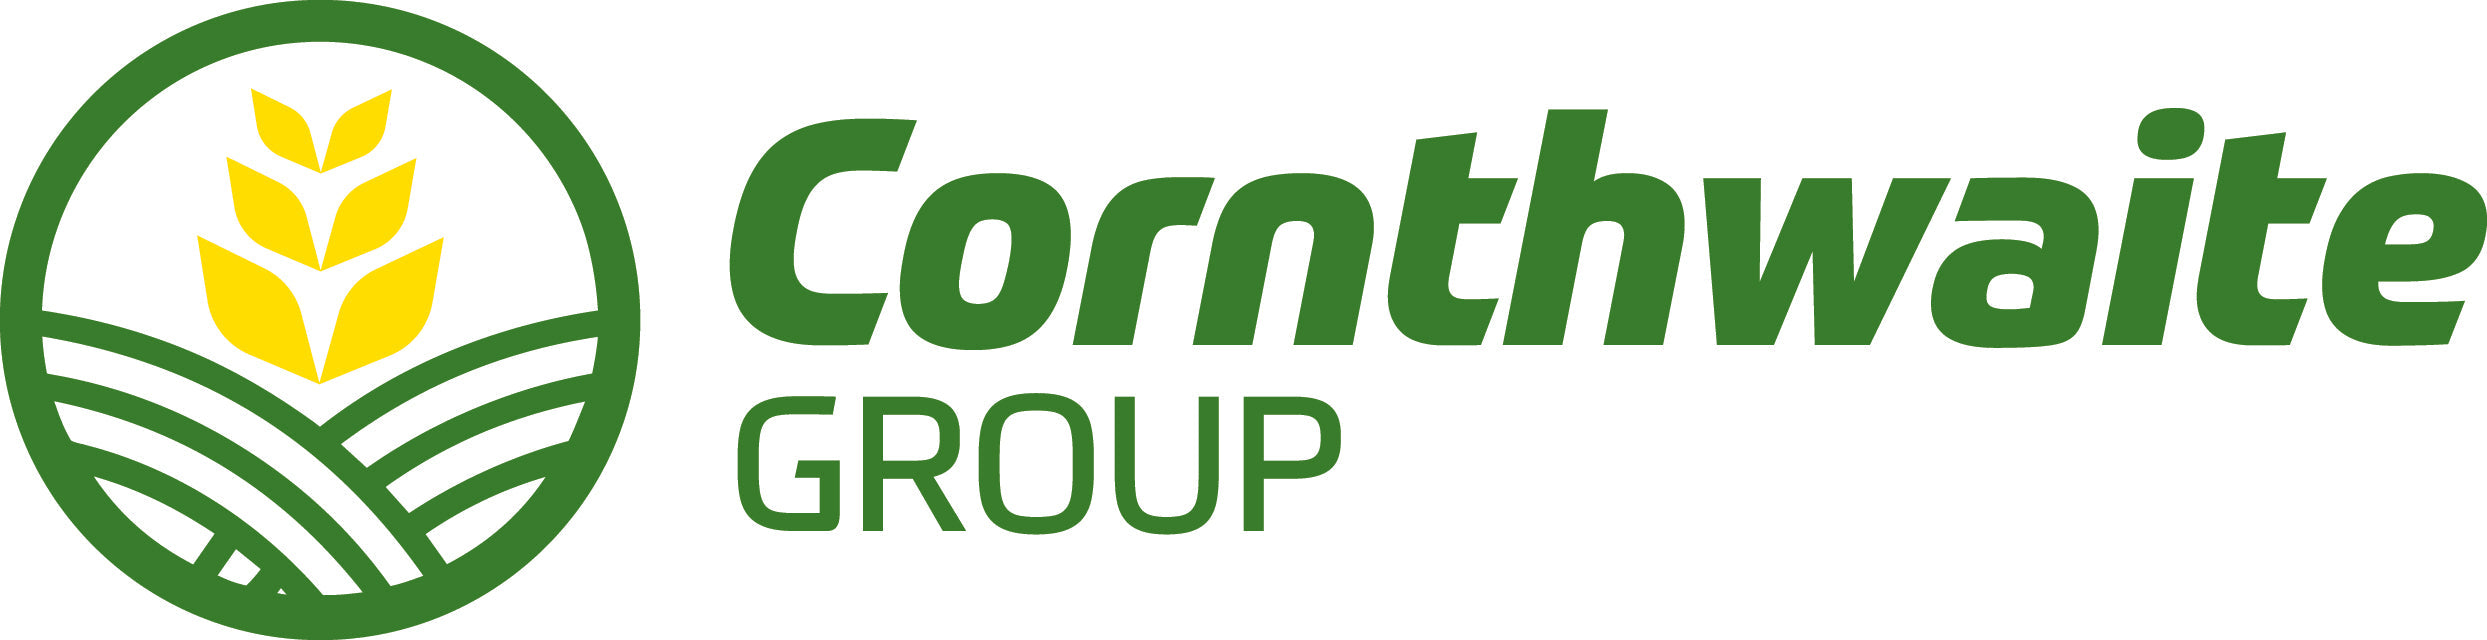 Cornthwaite Group - eShop